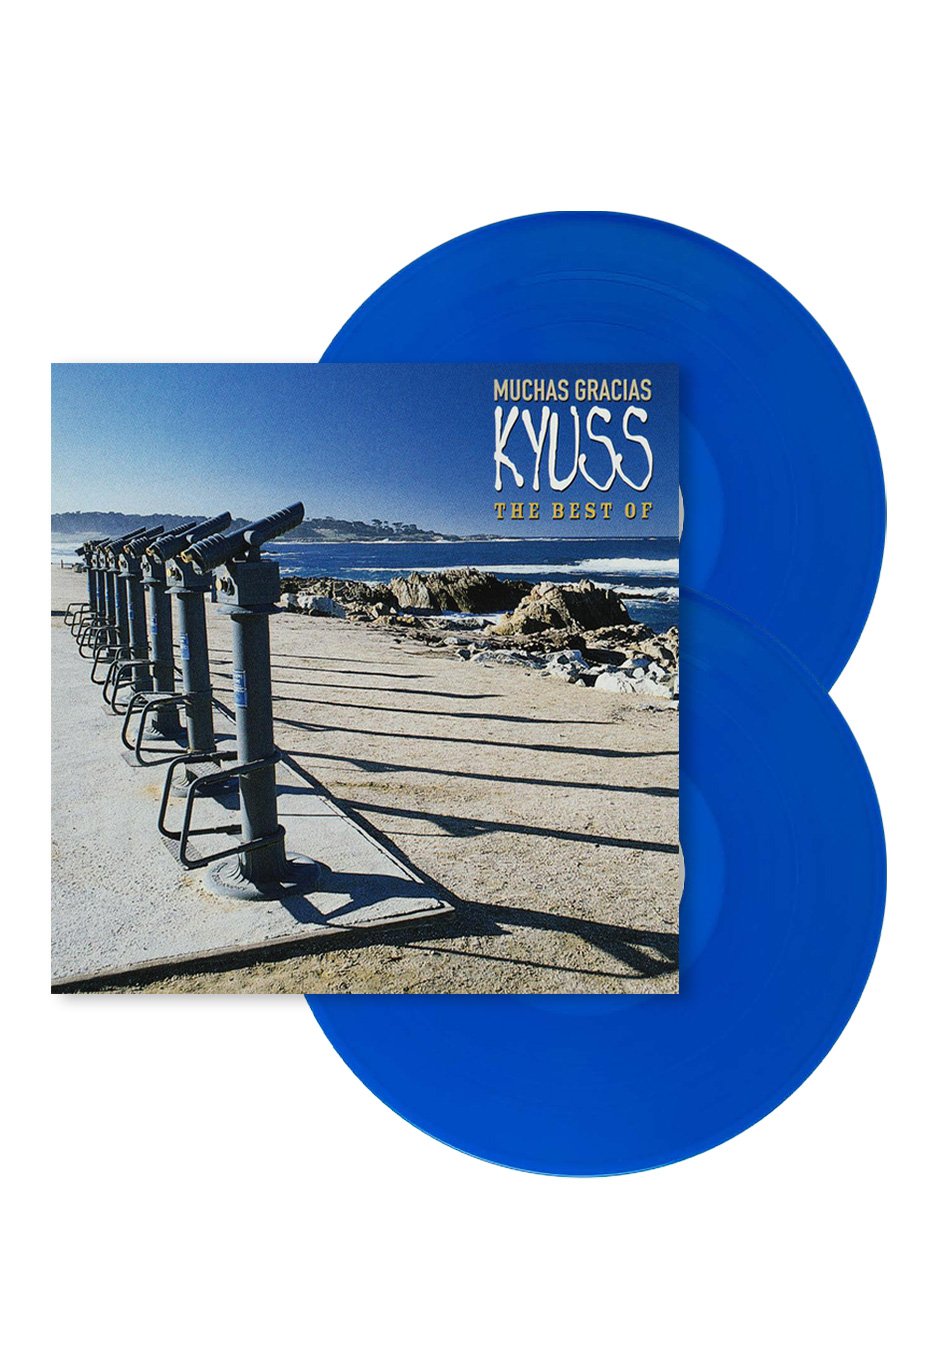 Kyuss - Muchas Gracias: The Best Of Kyuss Blue - Colored 2 Vinyl